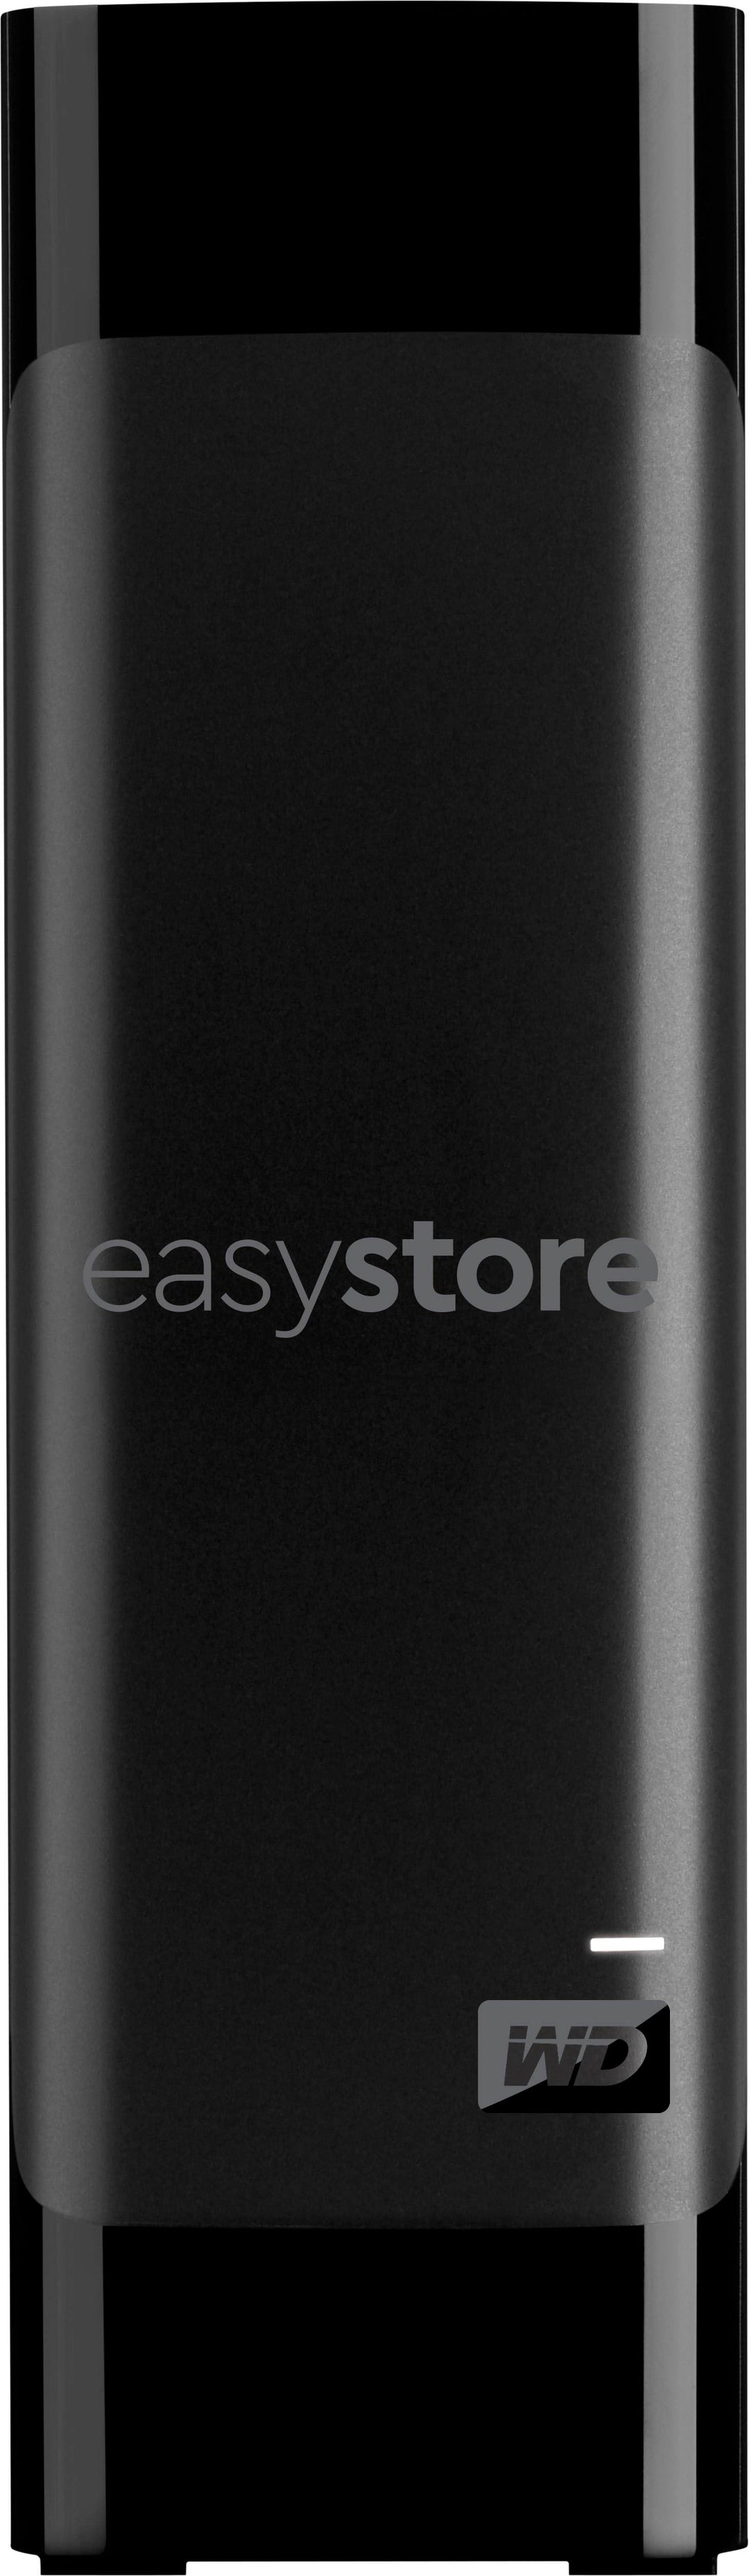 WD - easystore 18TB External USB 3.0 Hard Drive - Black_0